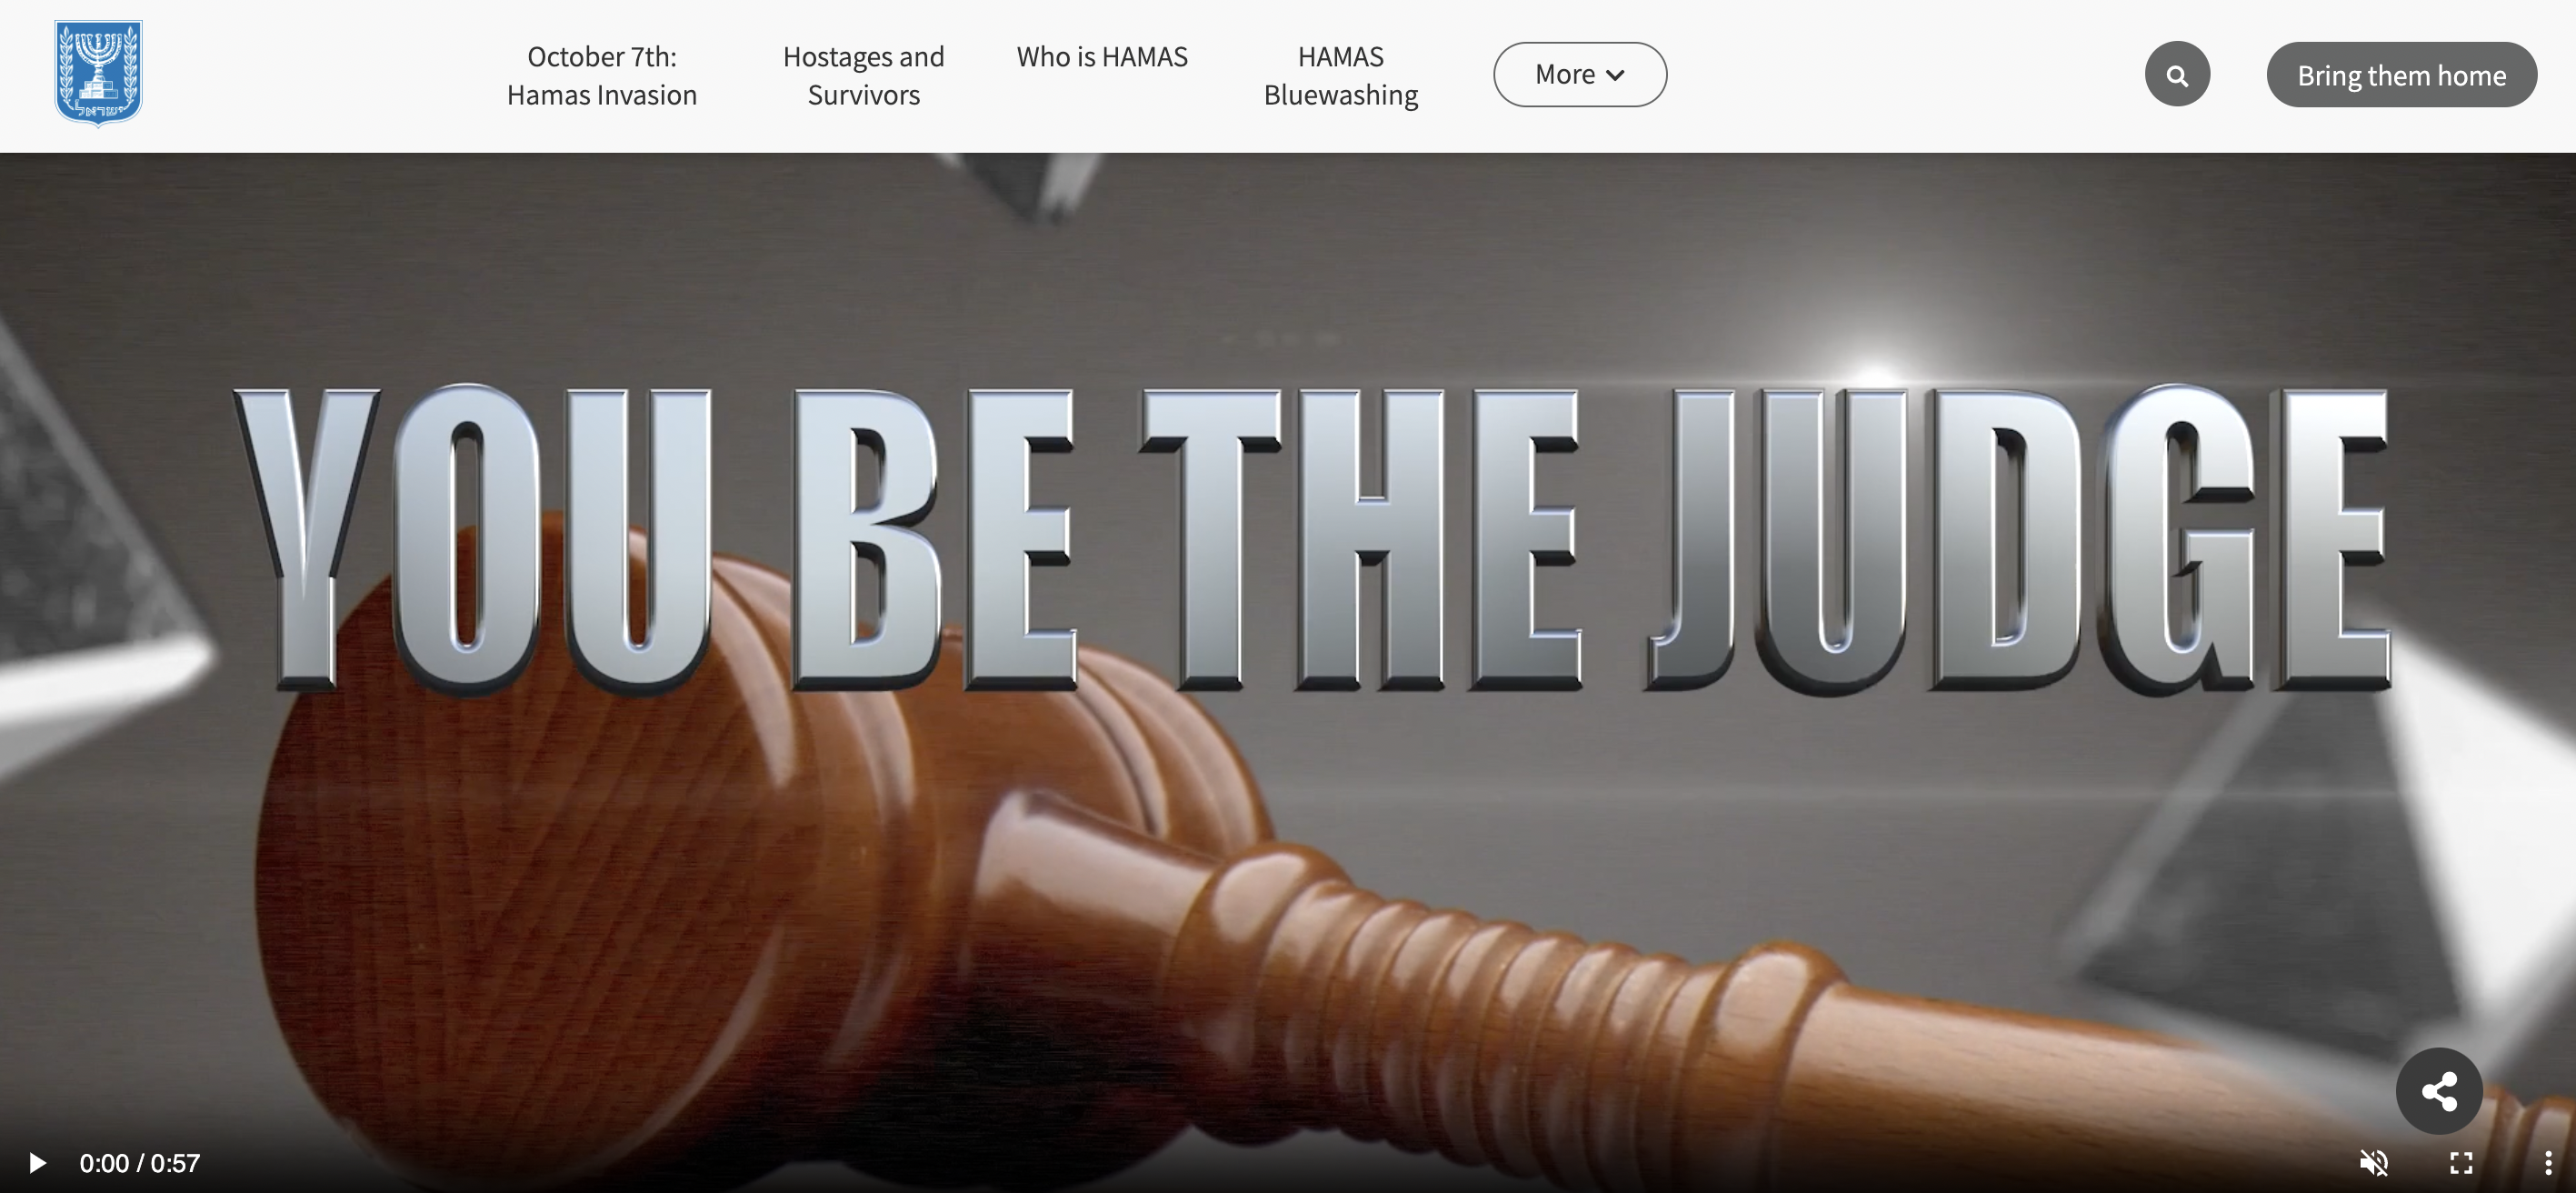 google ads israel sidang gugatan genosida afrika selatan mahkamah internasional pbb den haag international court of justice icj vice.com